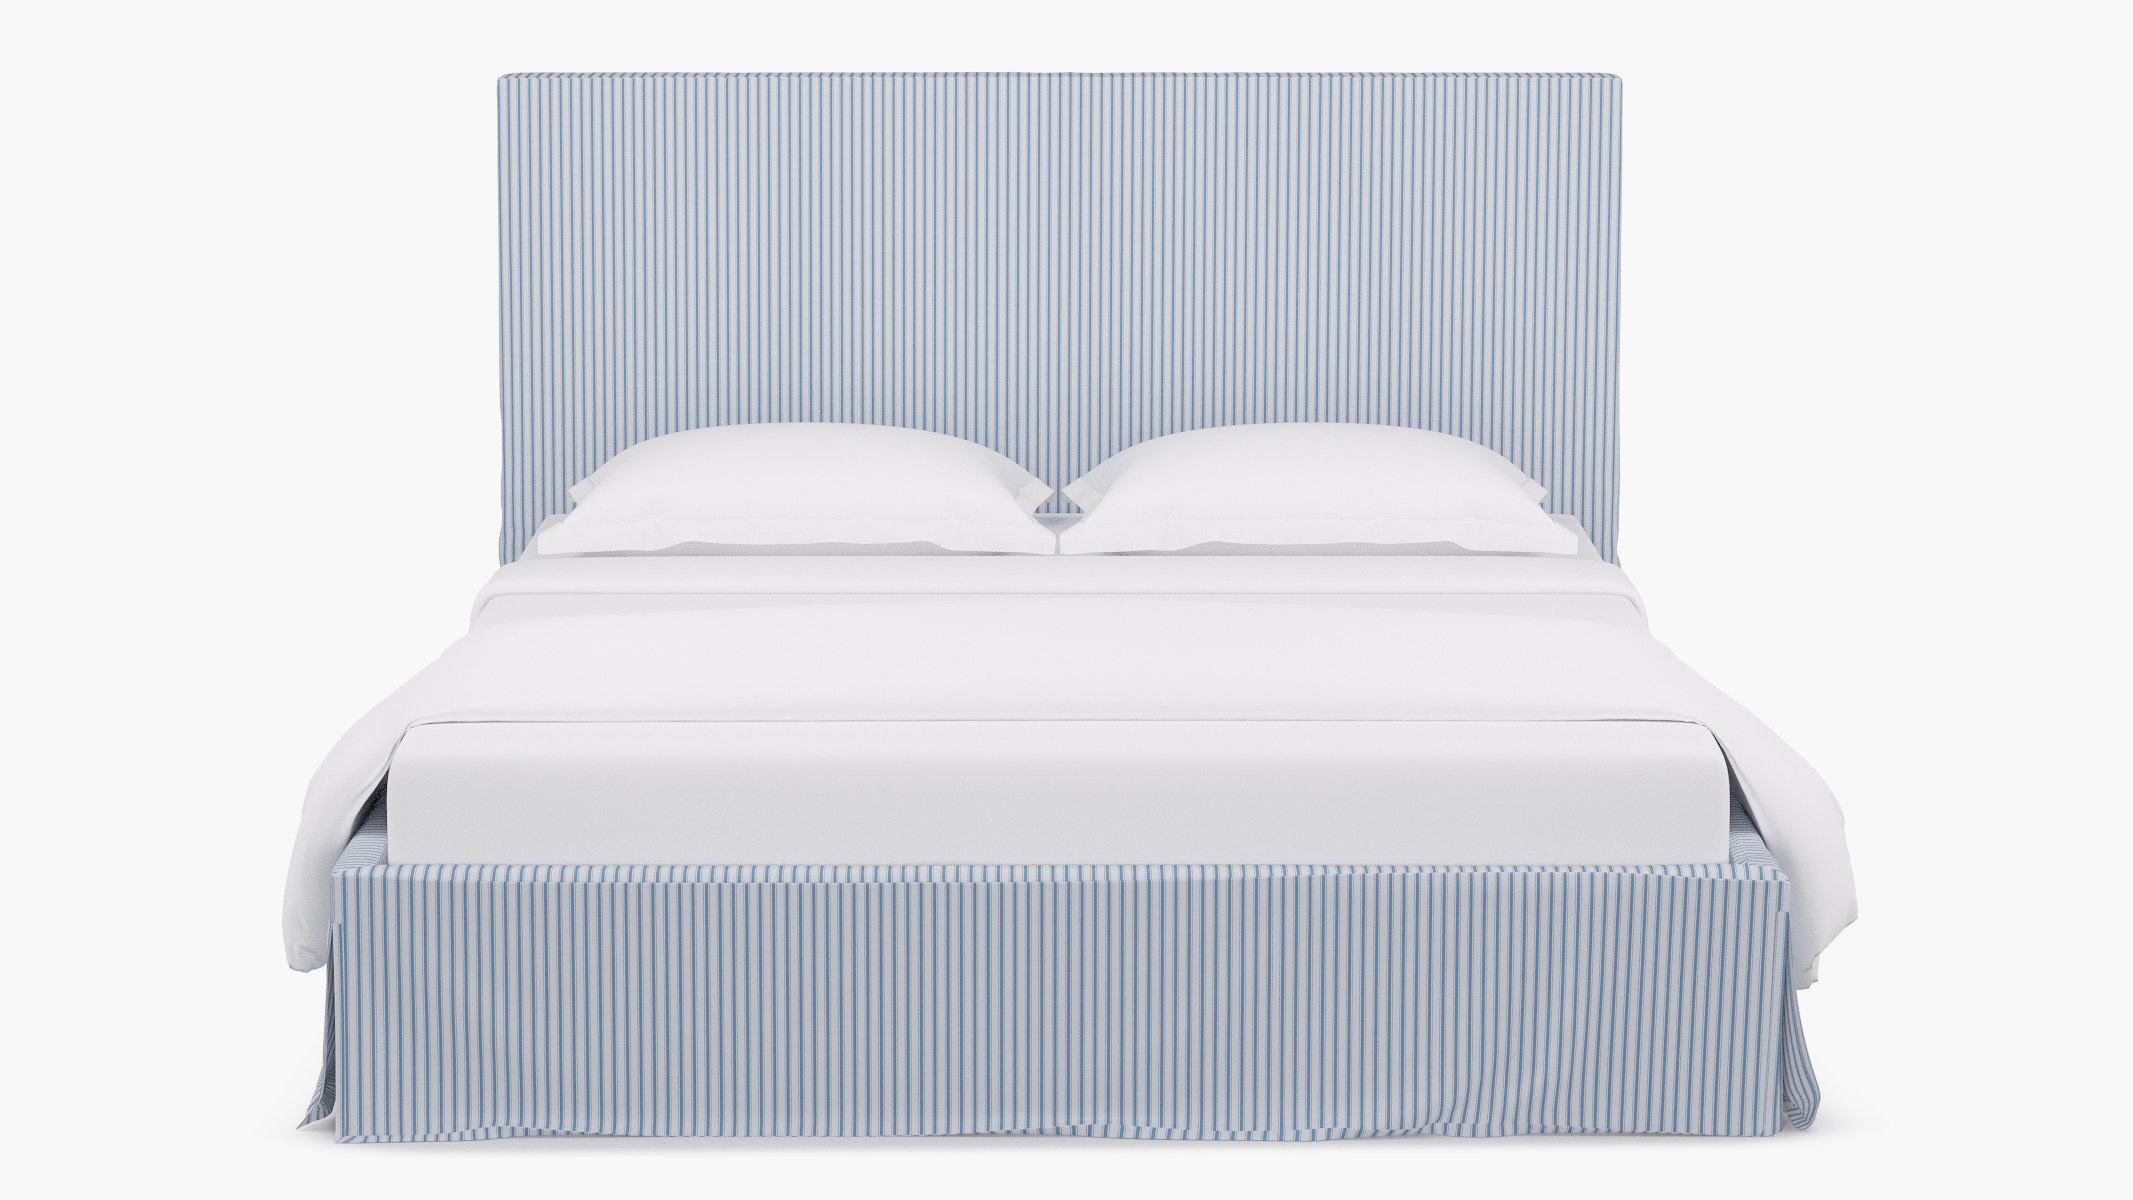 Slipcovered Bed, Cornflower Classic Ticking Stripe, King - Image 1